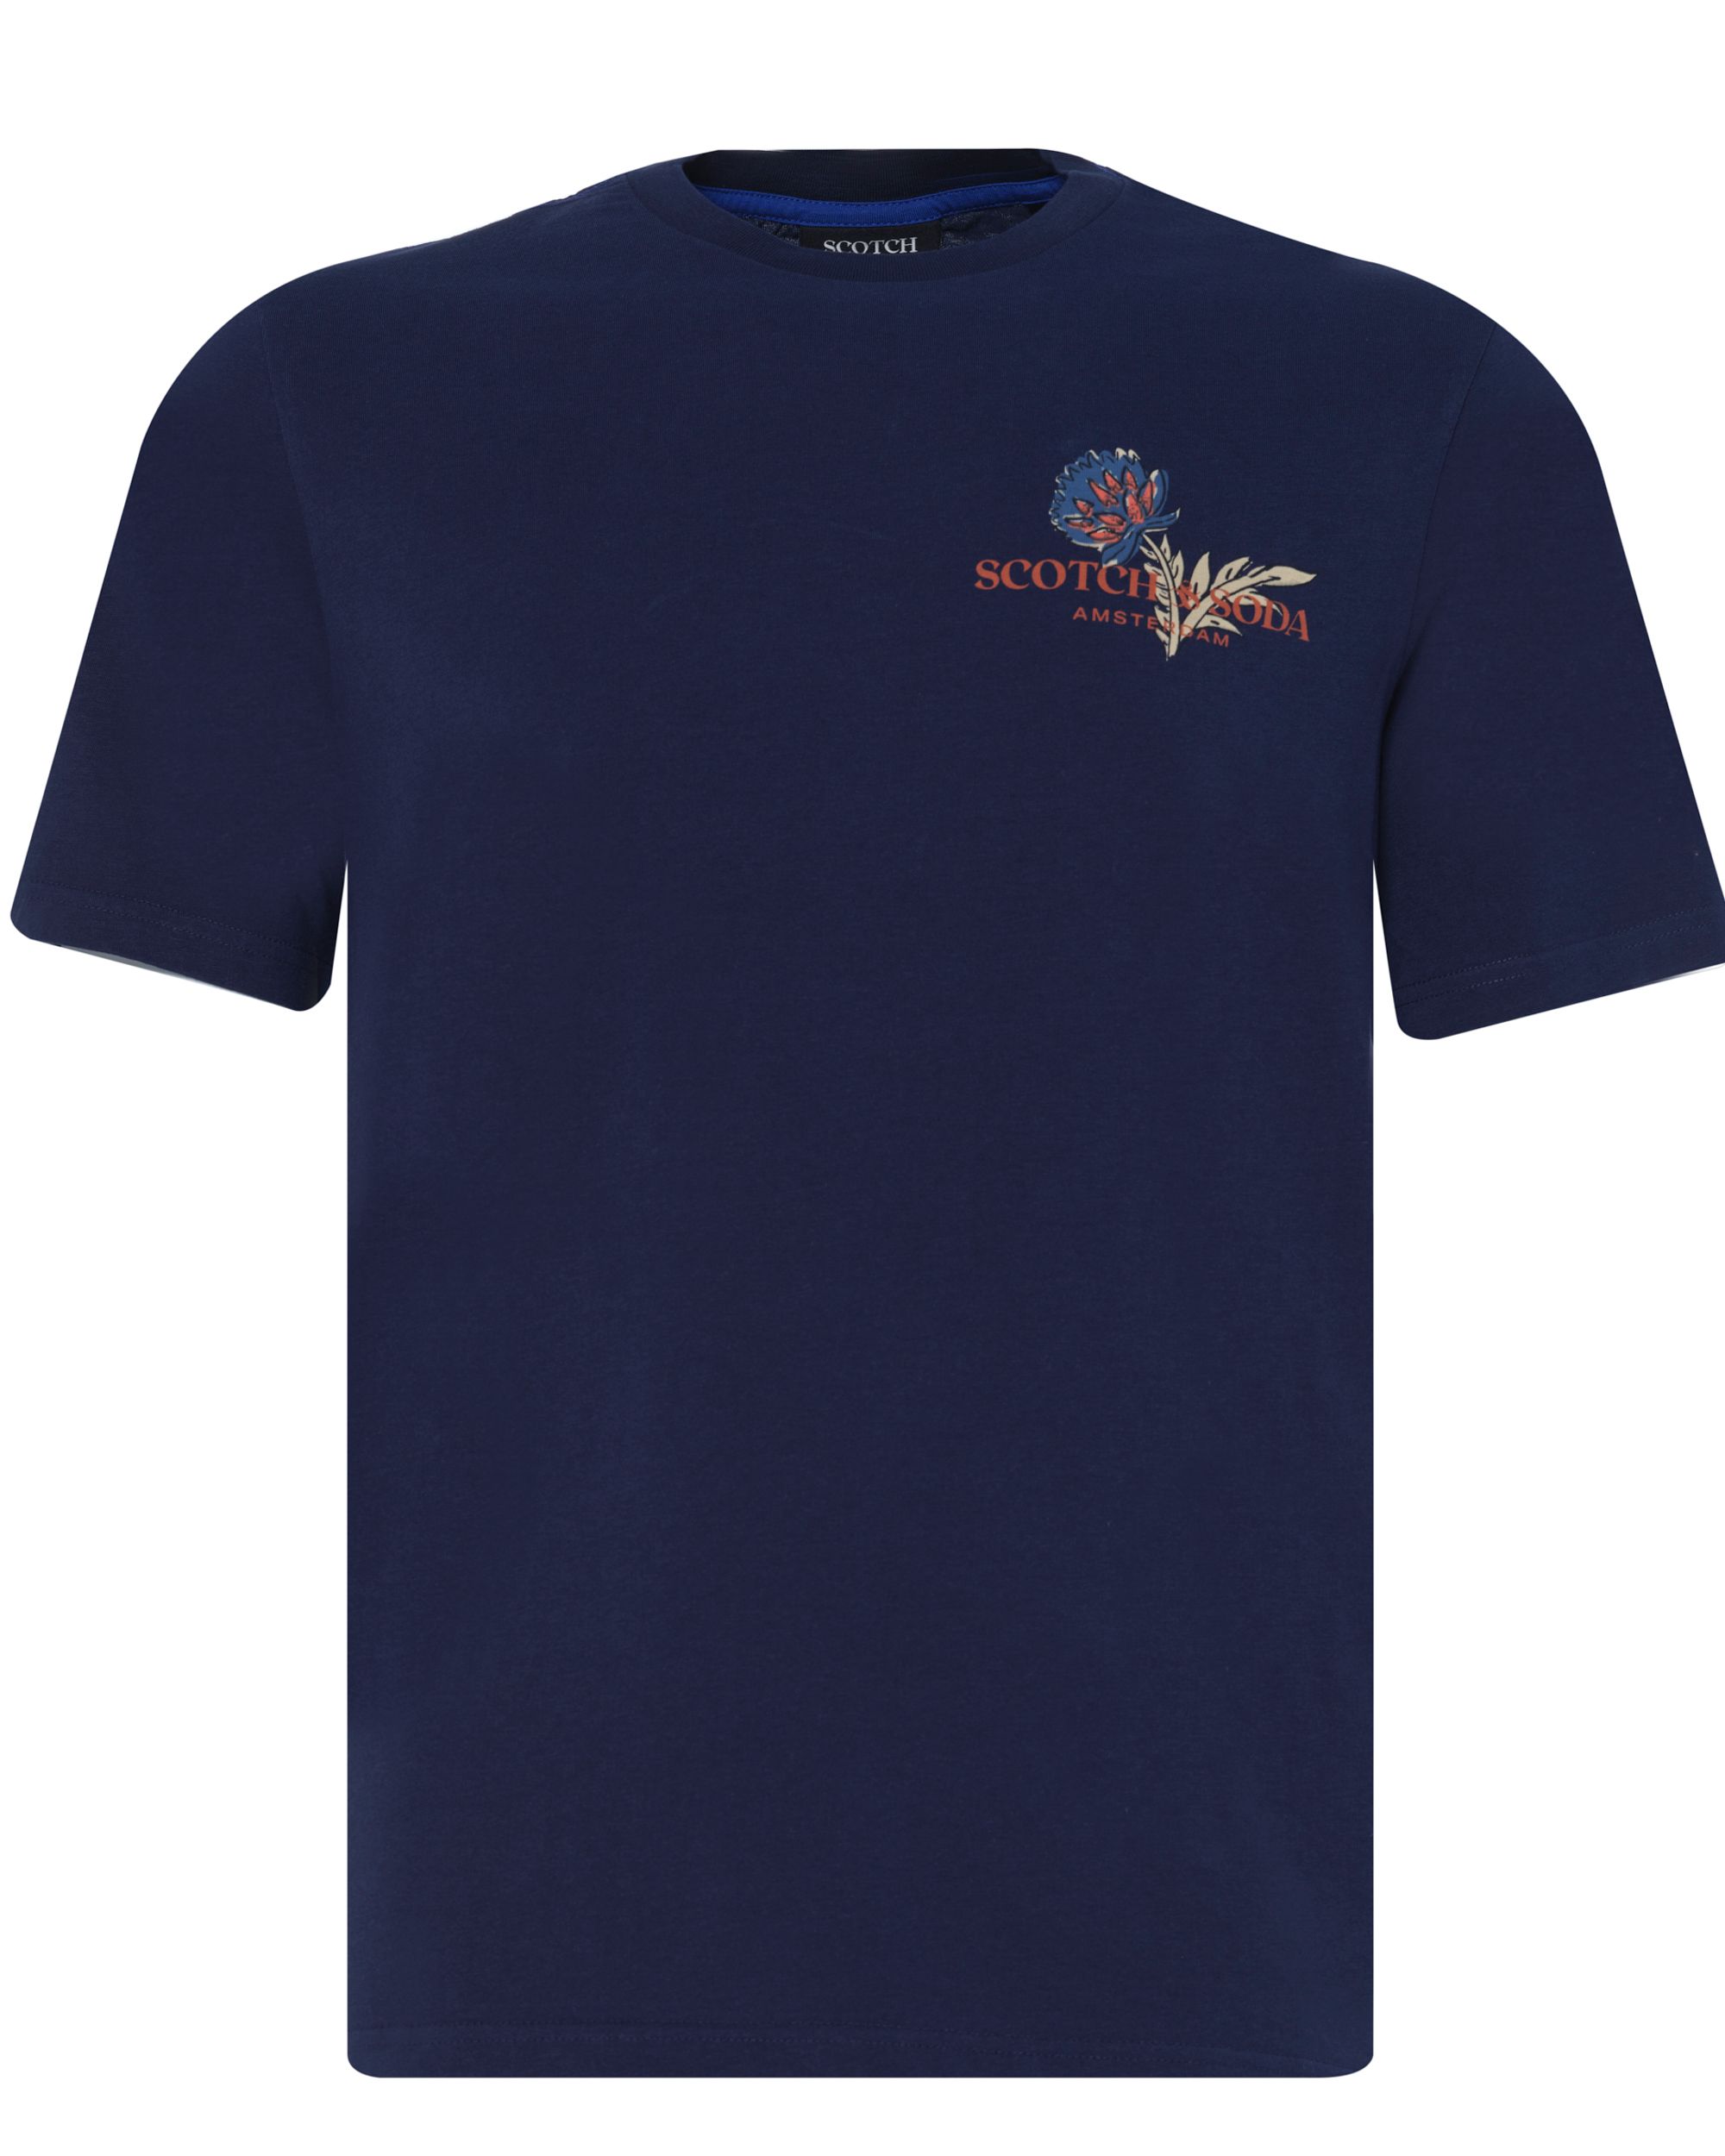 Scotch & Soda T-shirt KM Donker blauw 080218-001-L